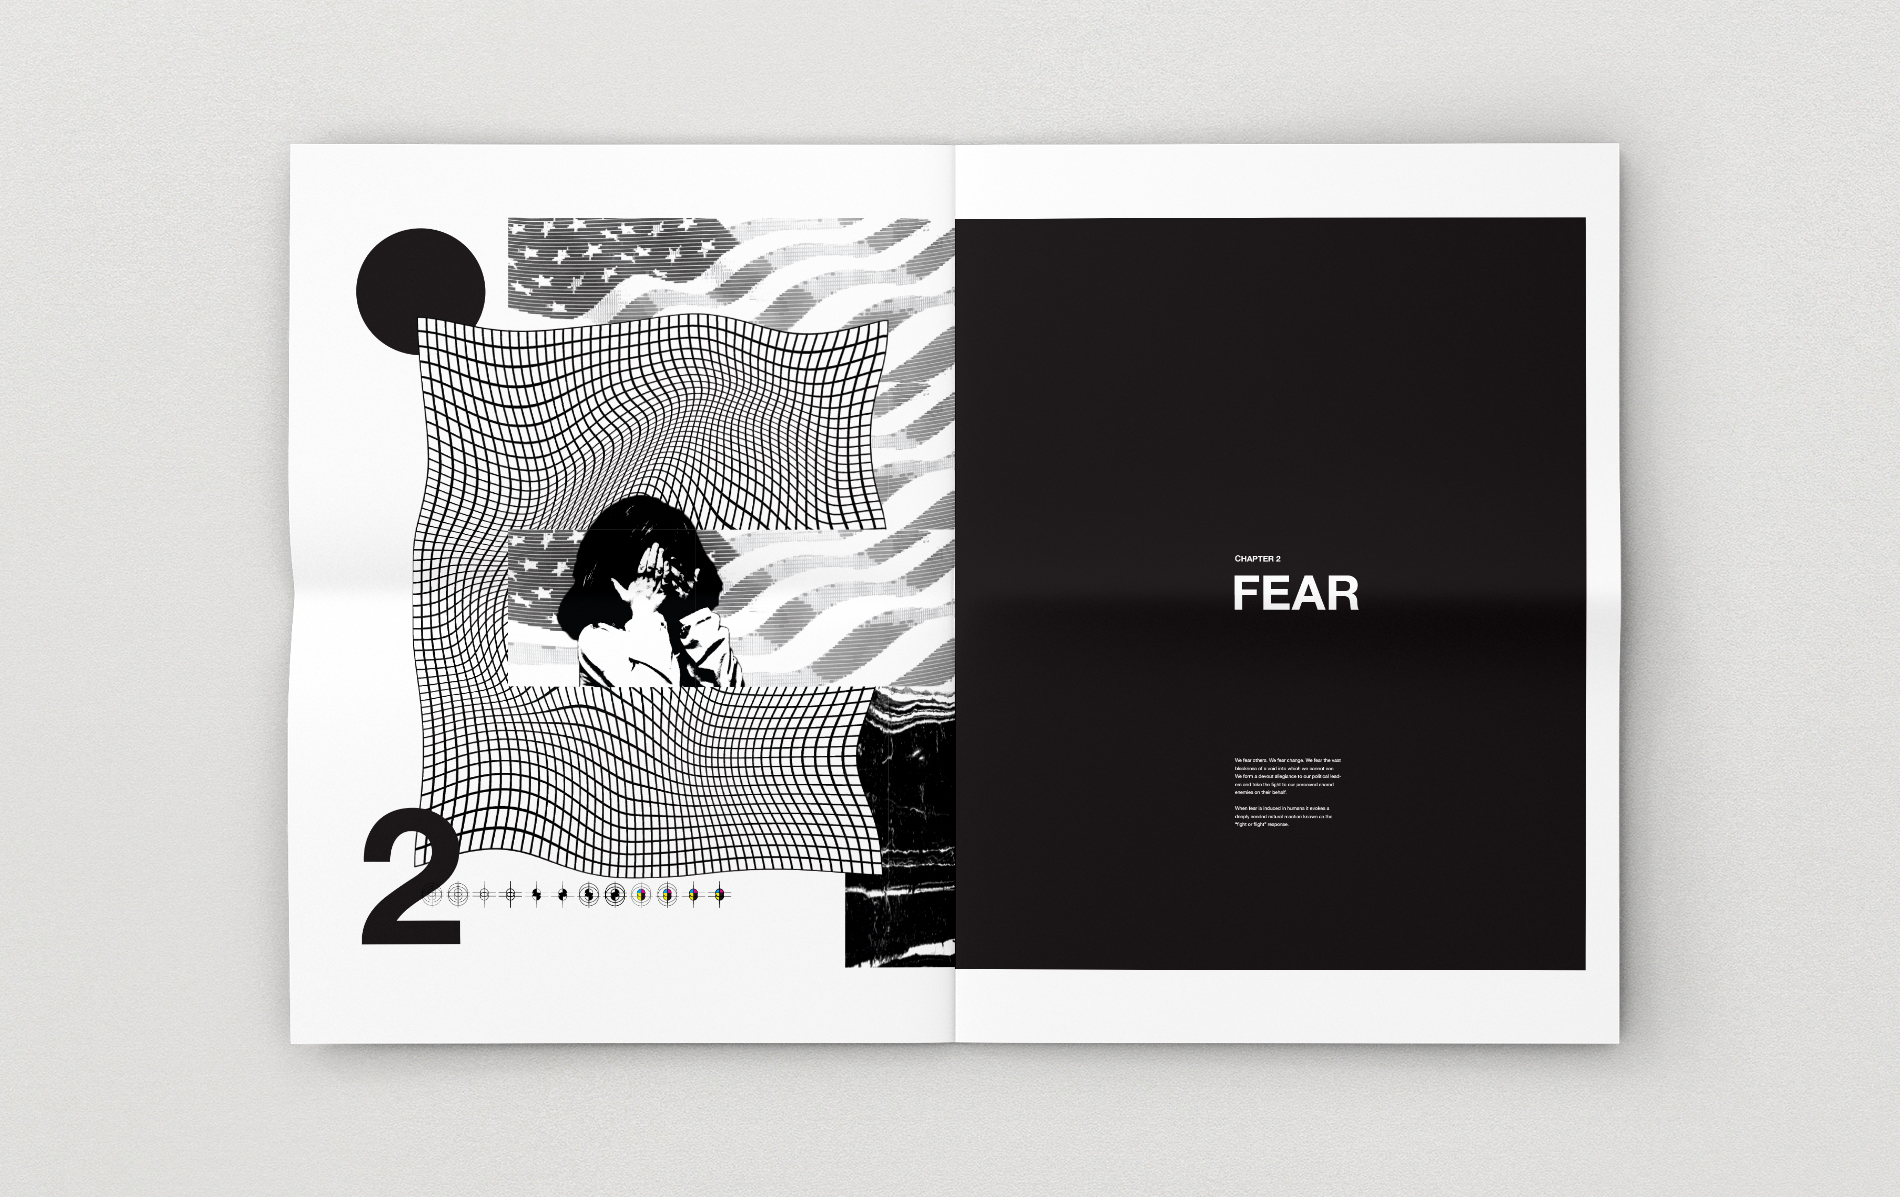 Press - The Colour of Fear, Rob Egan